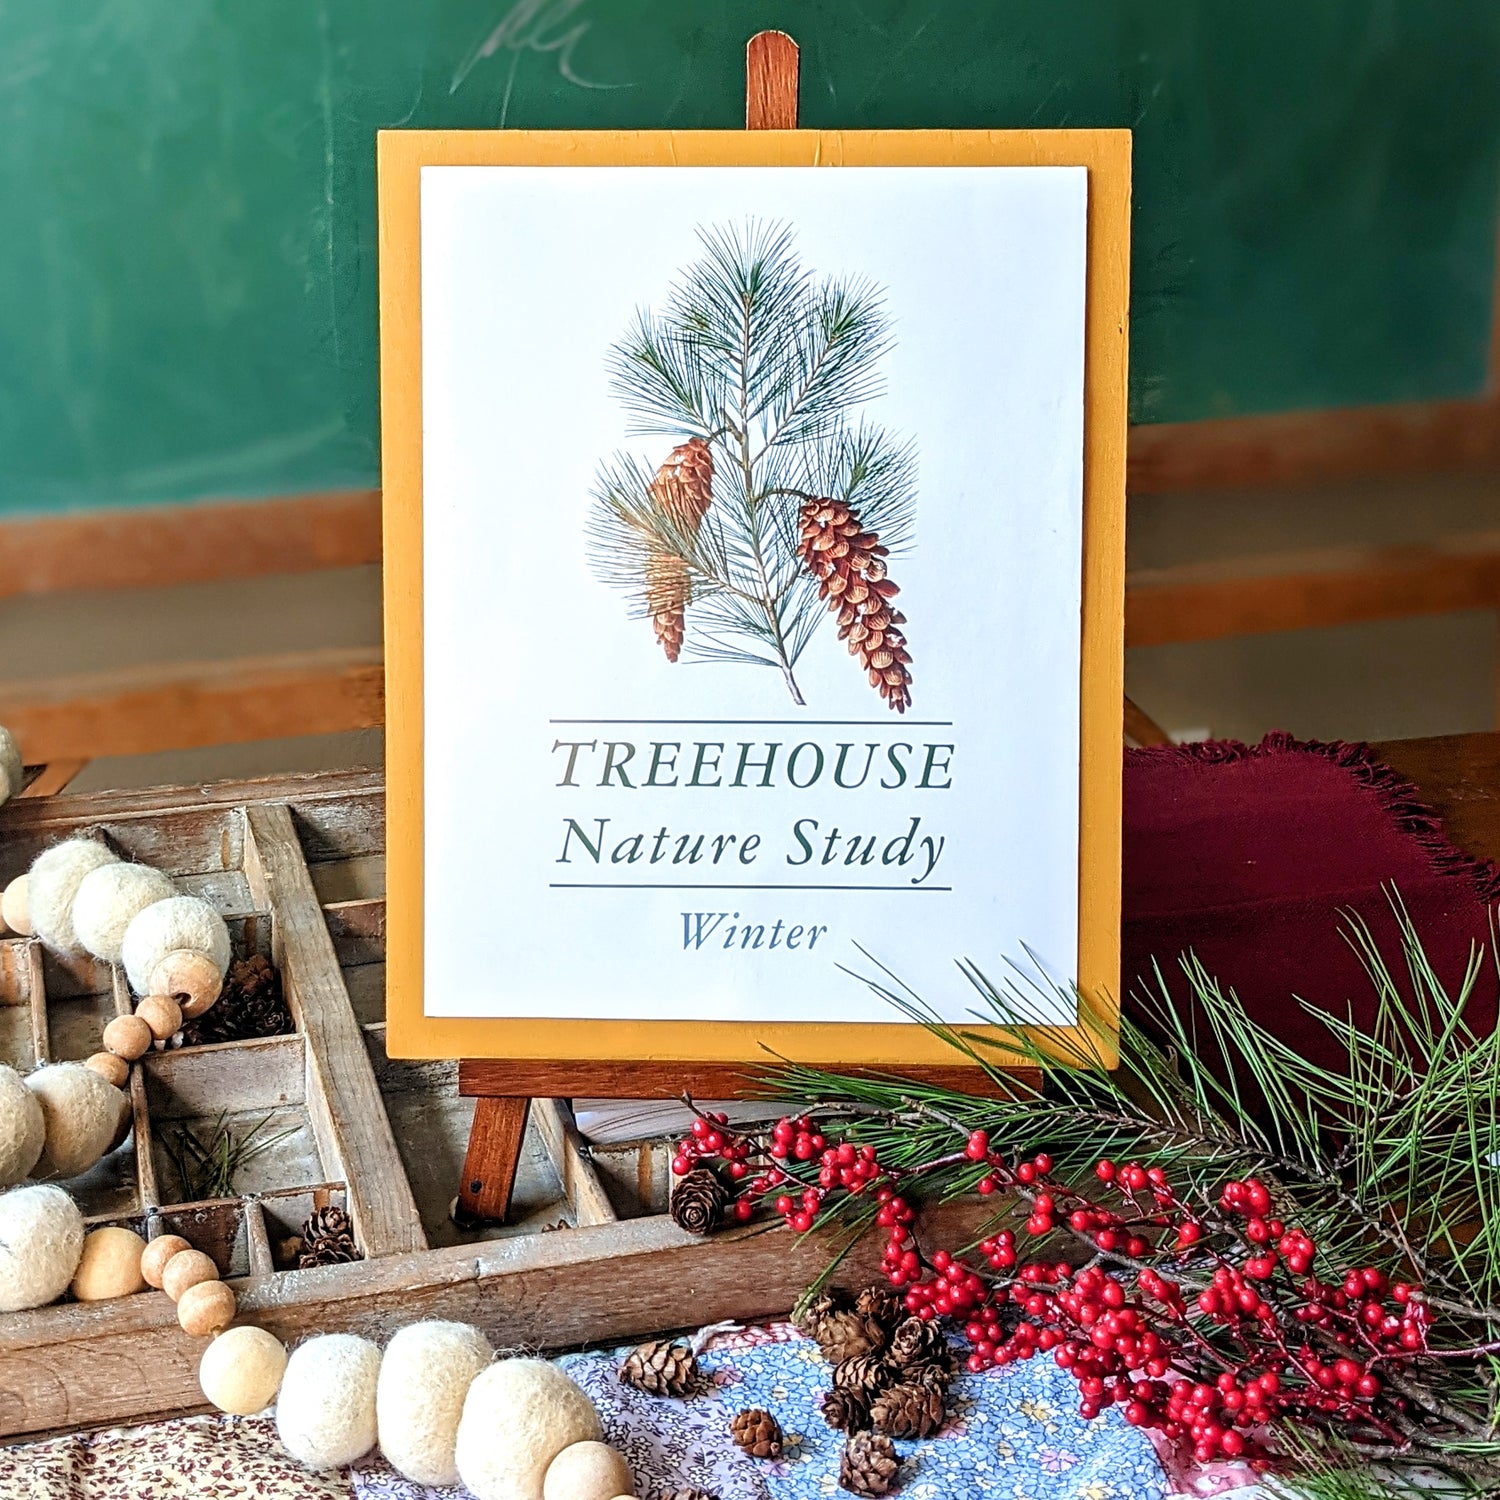 Treehouse Nature Study: Winter